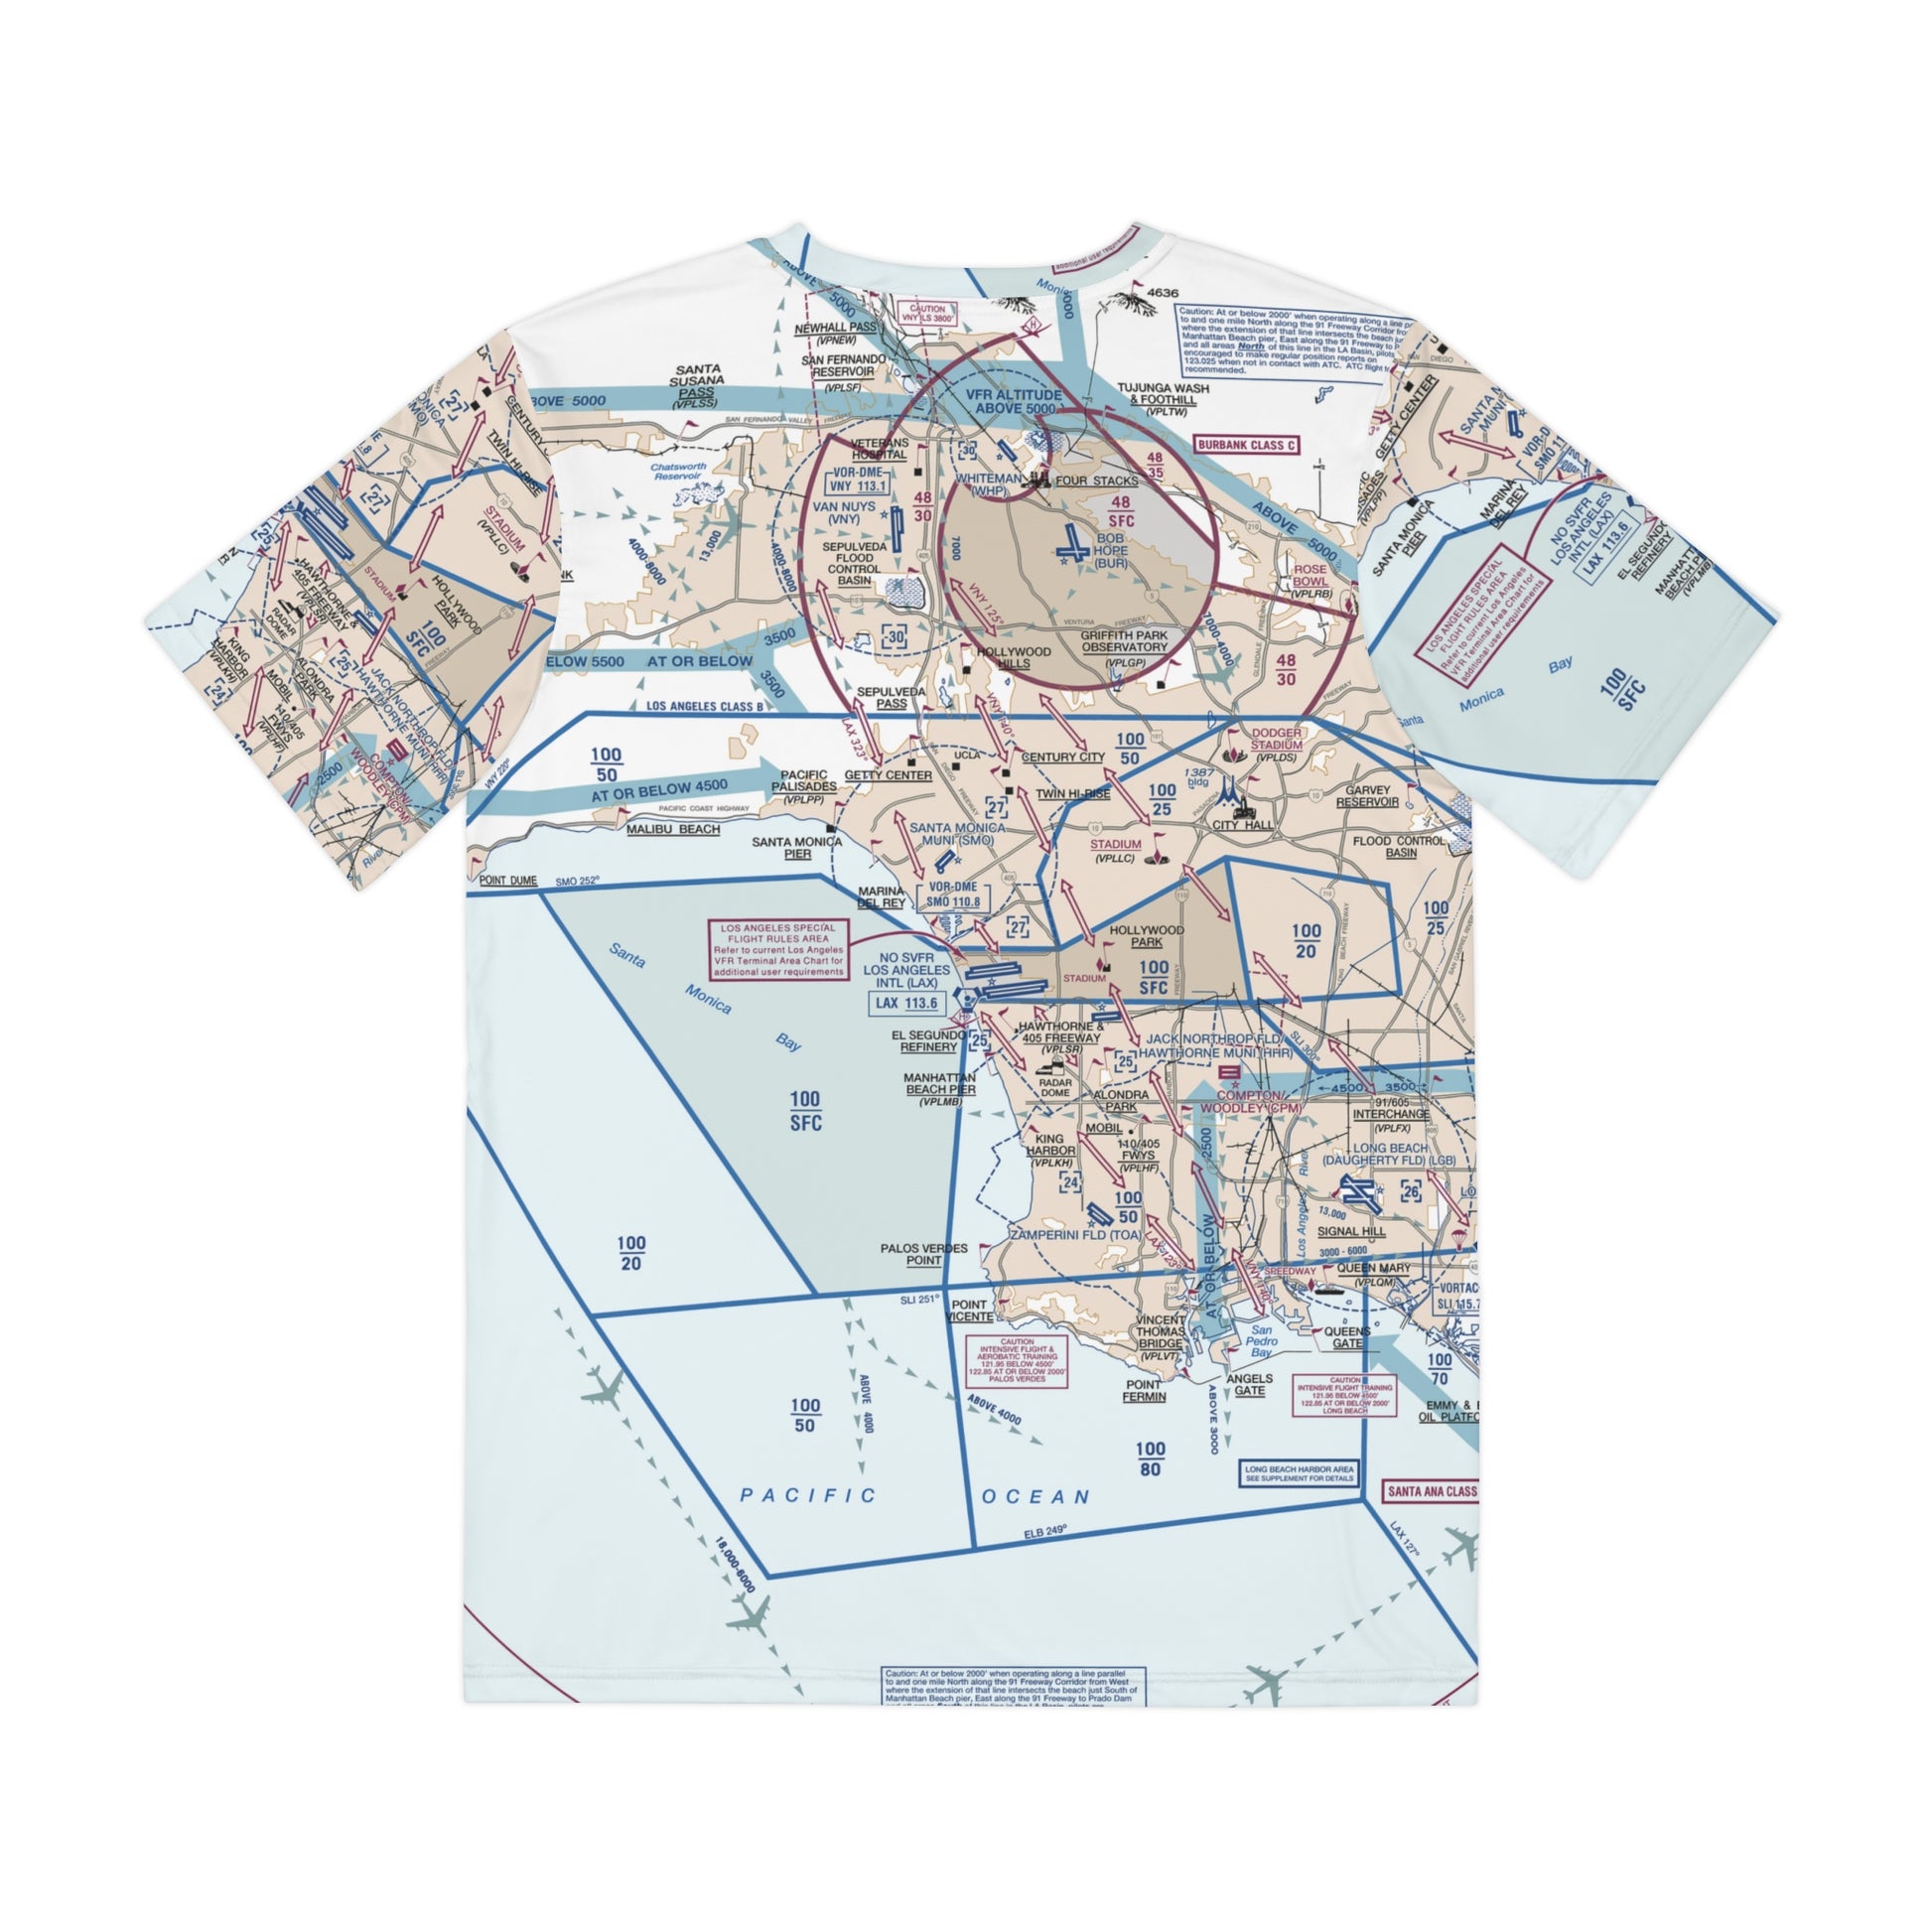 LAX Flyway Chart men's polyester shirt